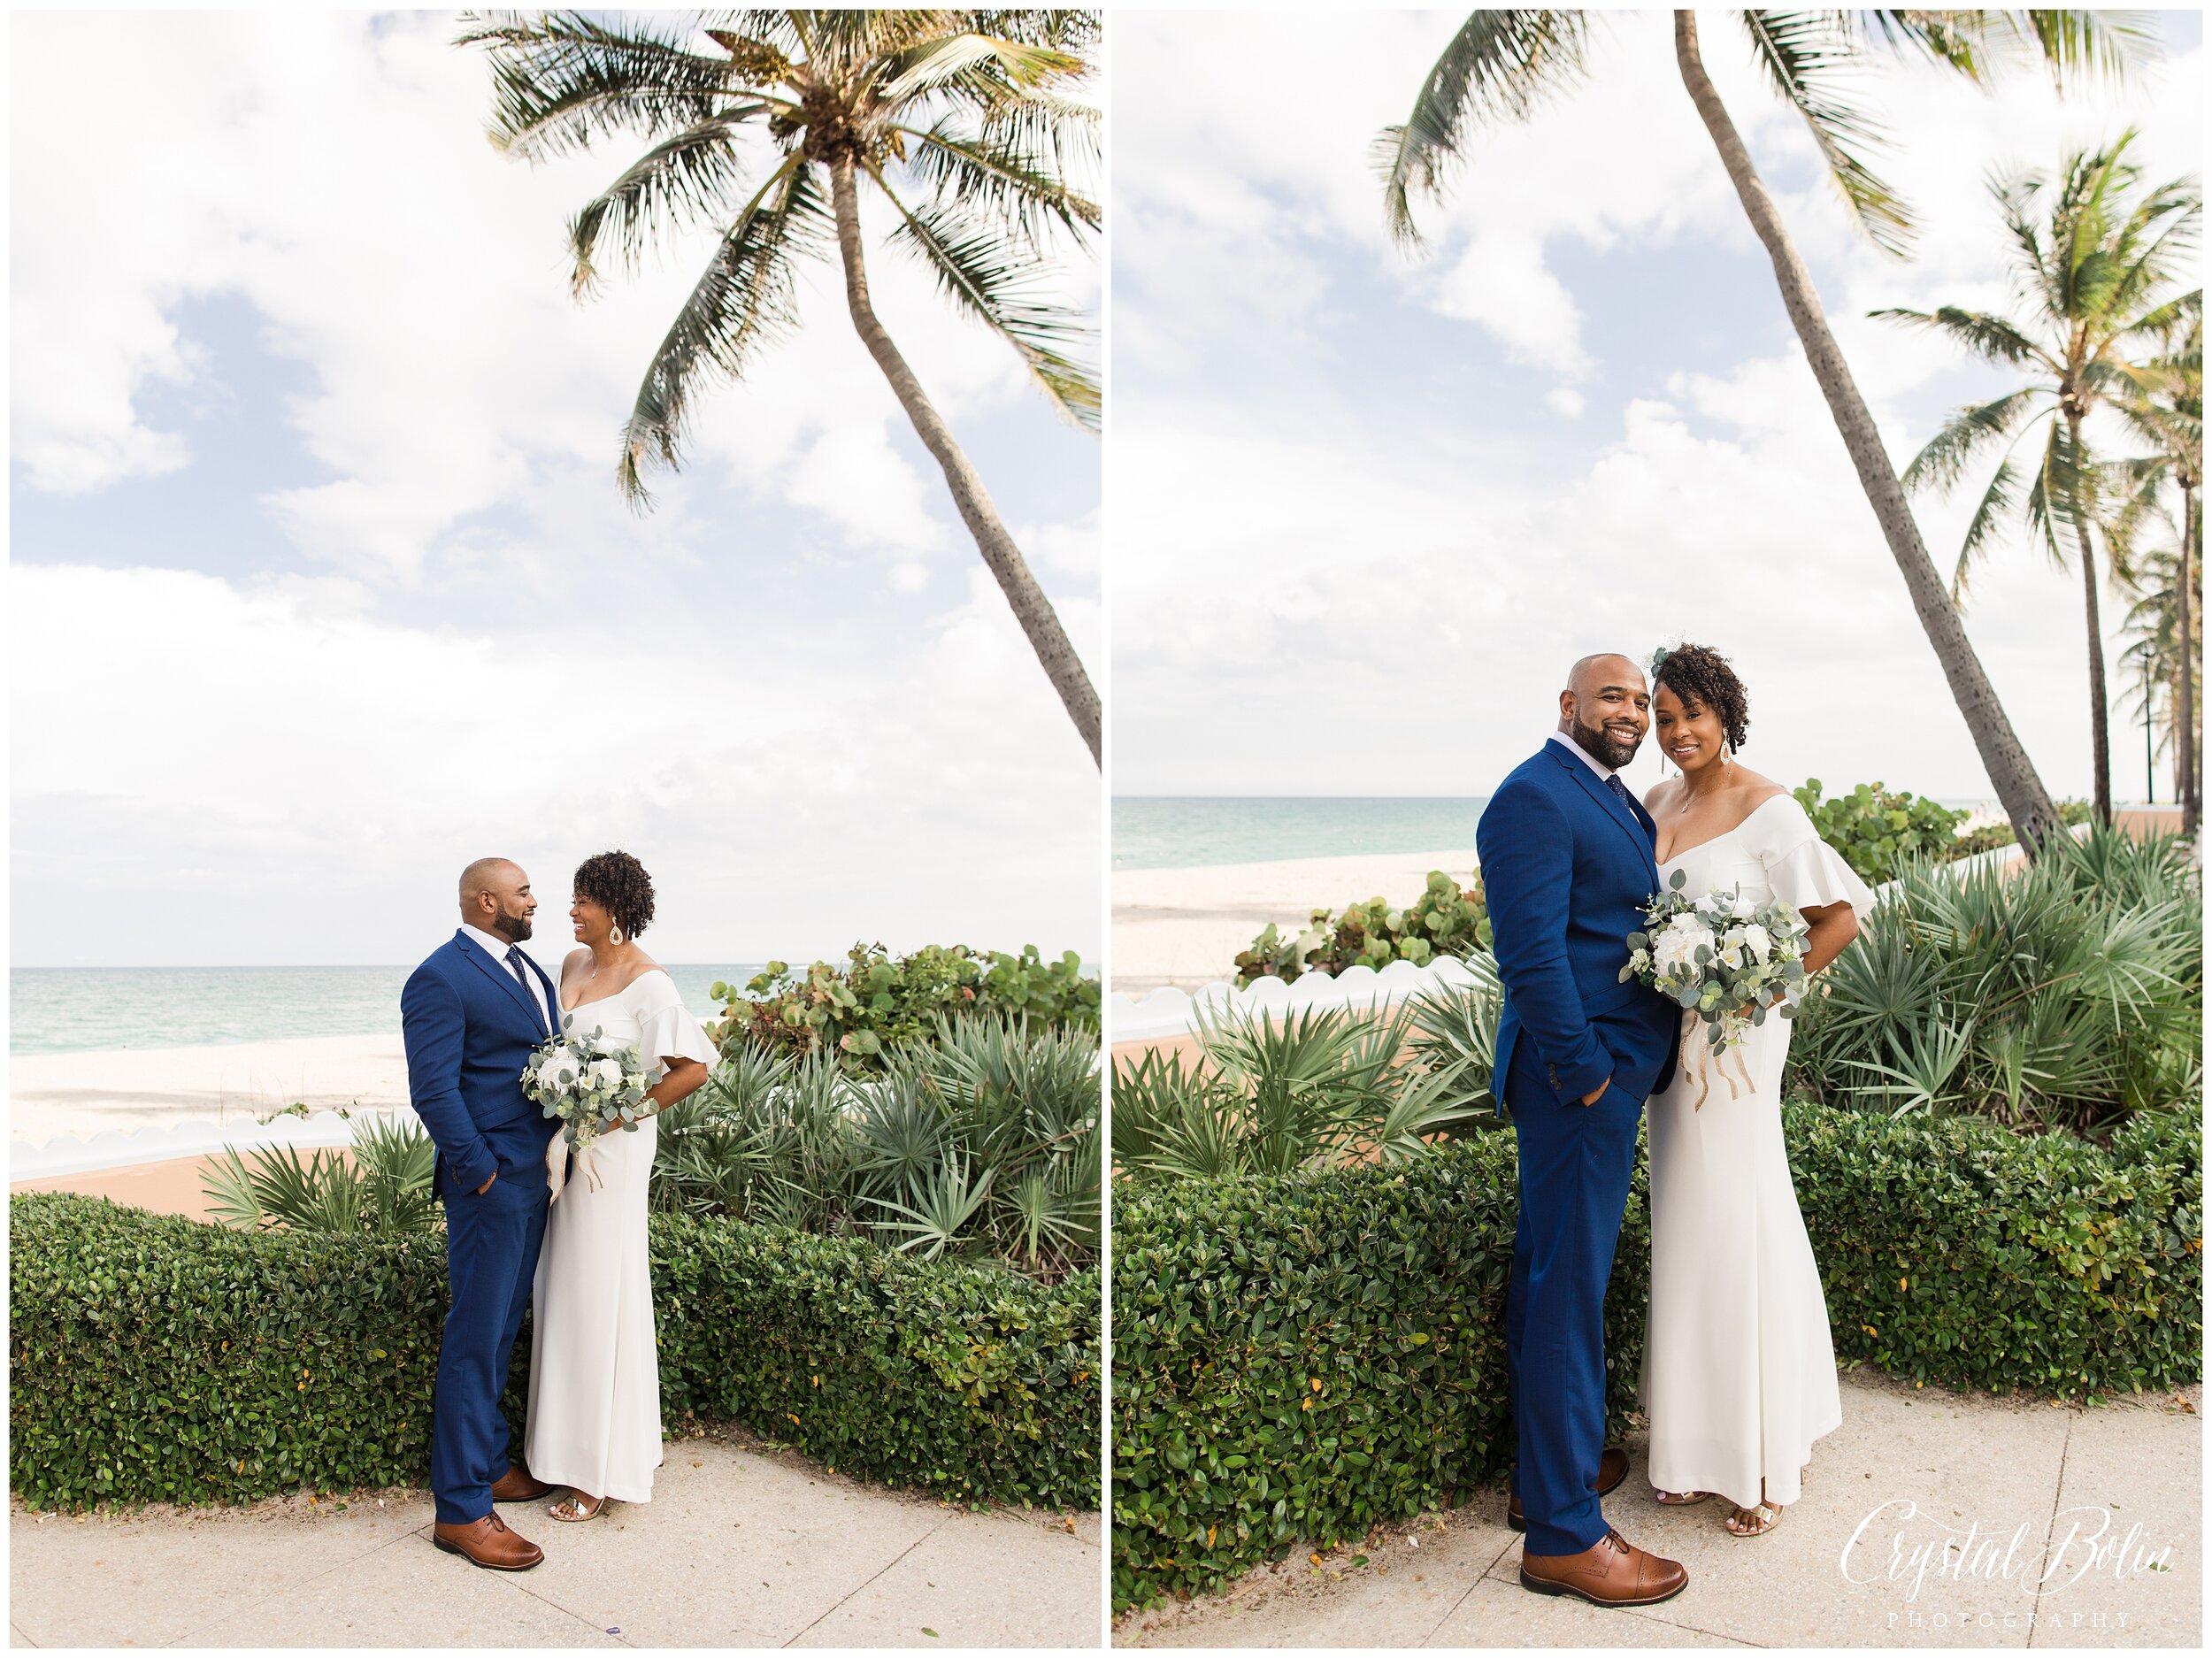 Courtney & Rick's Wedding | Worth Avenue, Palm Beach 2020